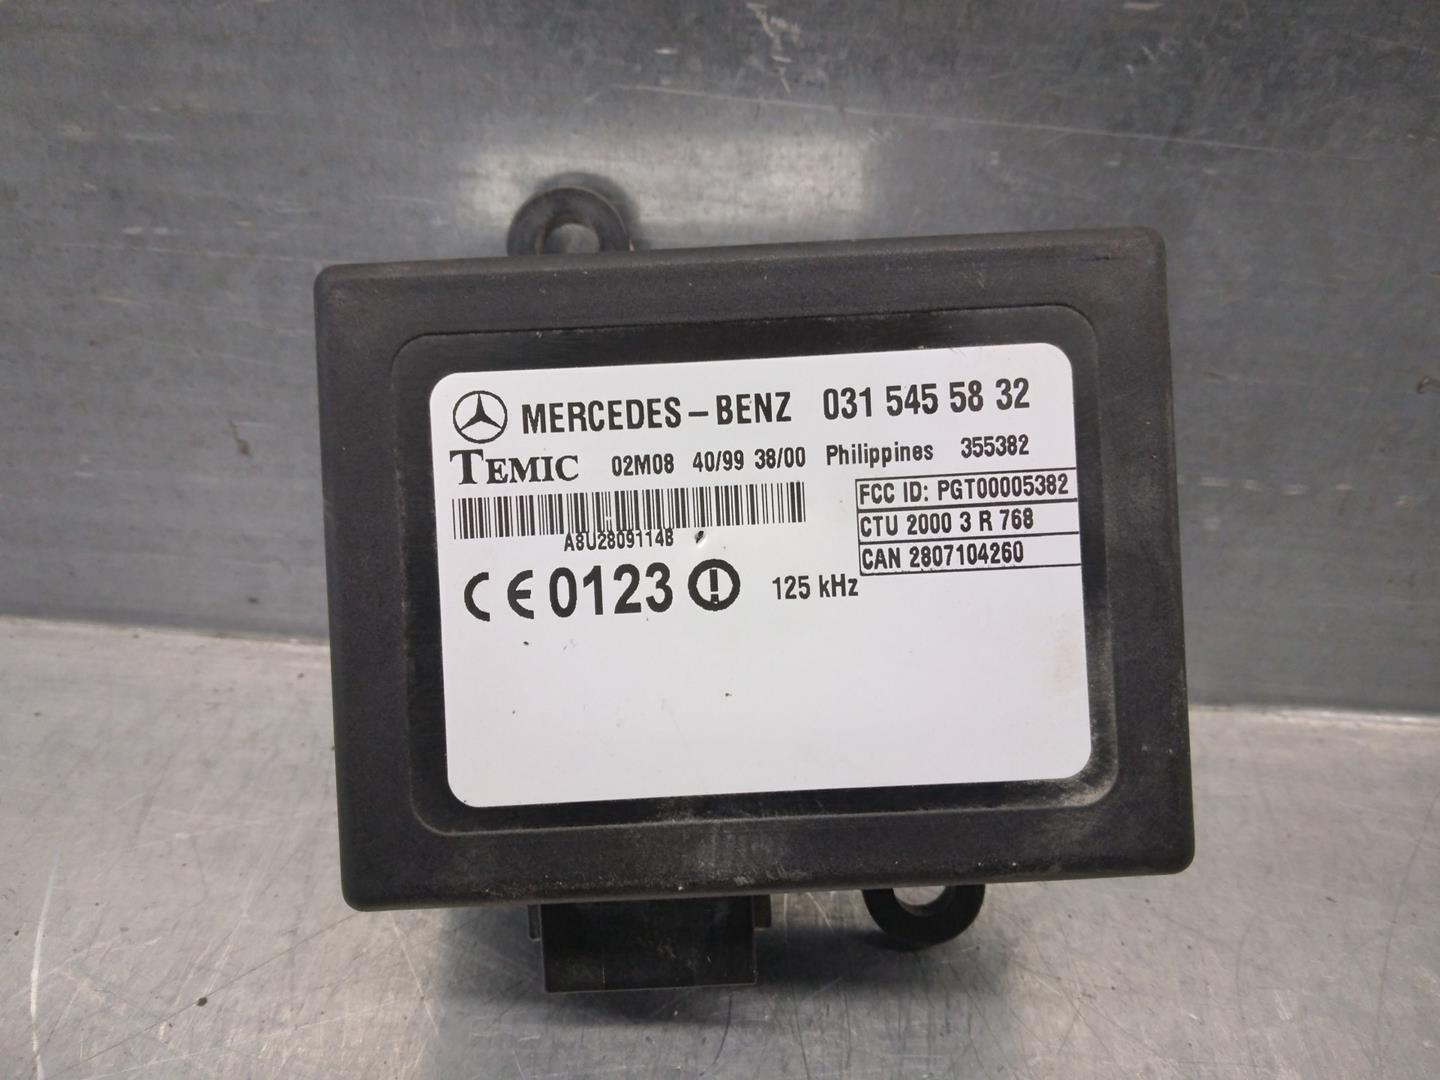 MERCEDES-BENZ Vito W638 (1996-2003) Immobiliser control unit 0315455832, 02M09, TEMIC 21108070